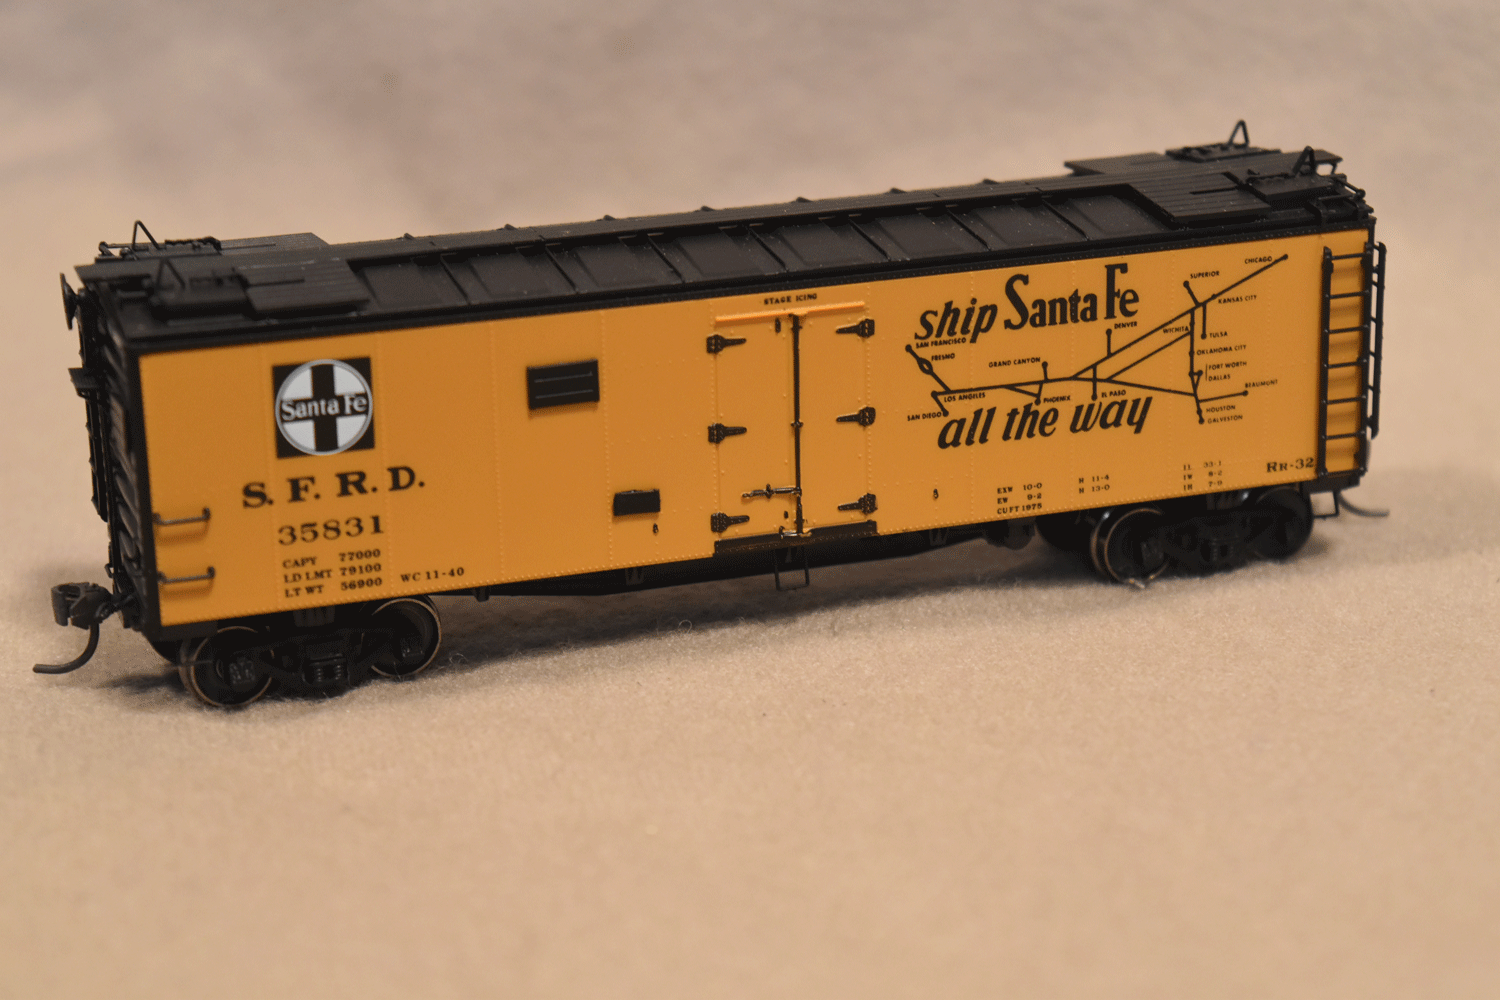 ATSF Rr-32 #35831 (model)